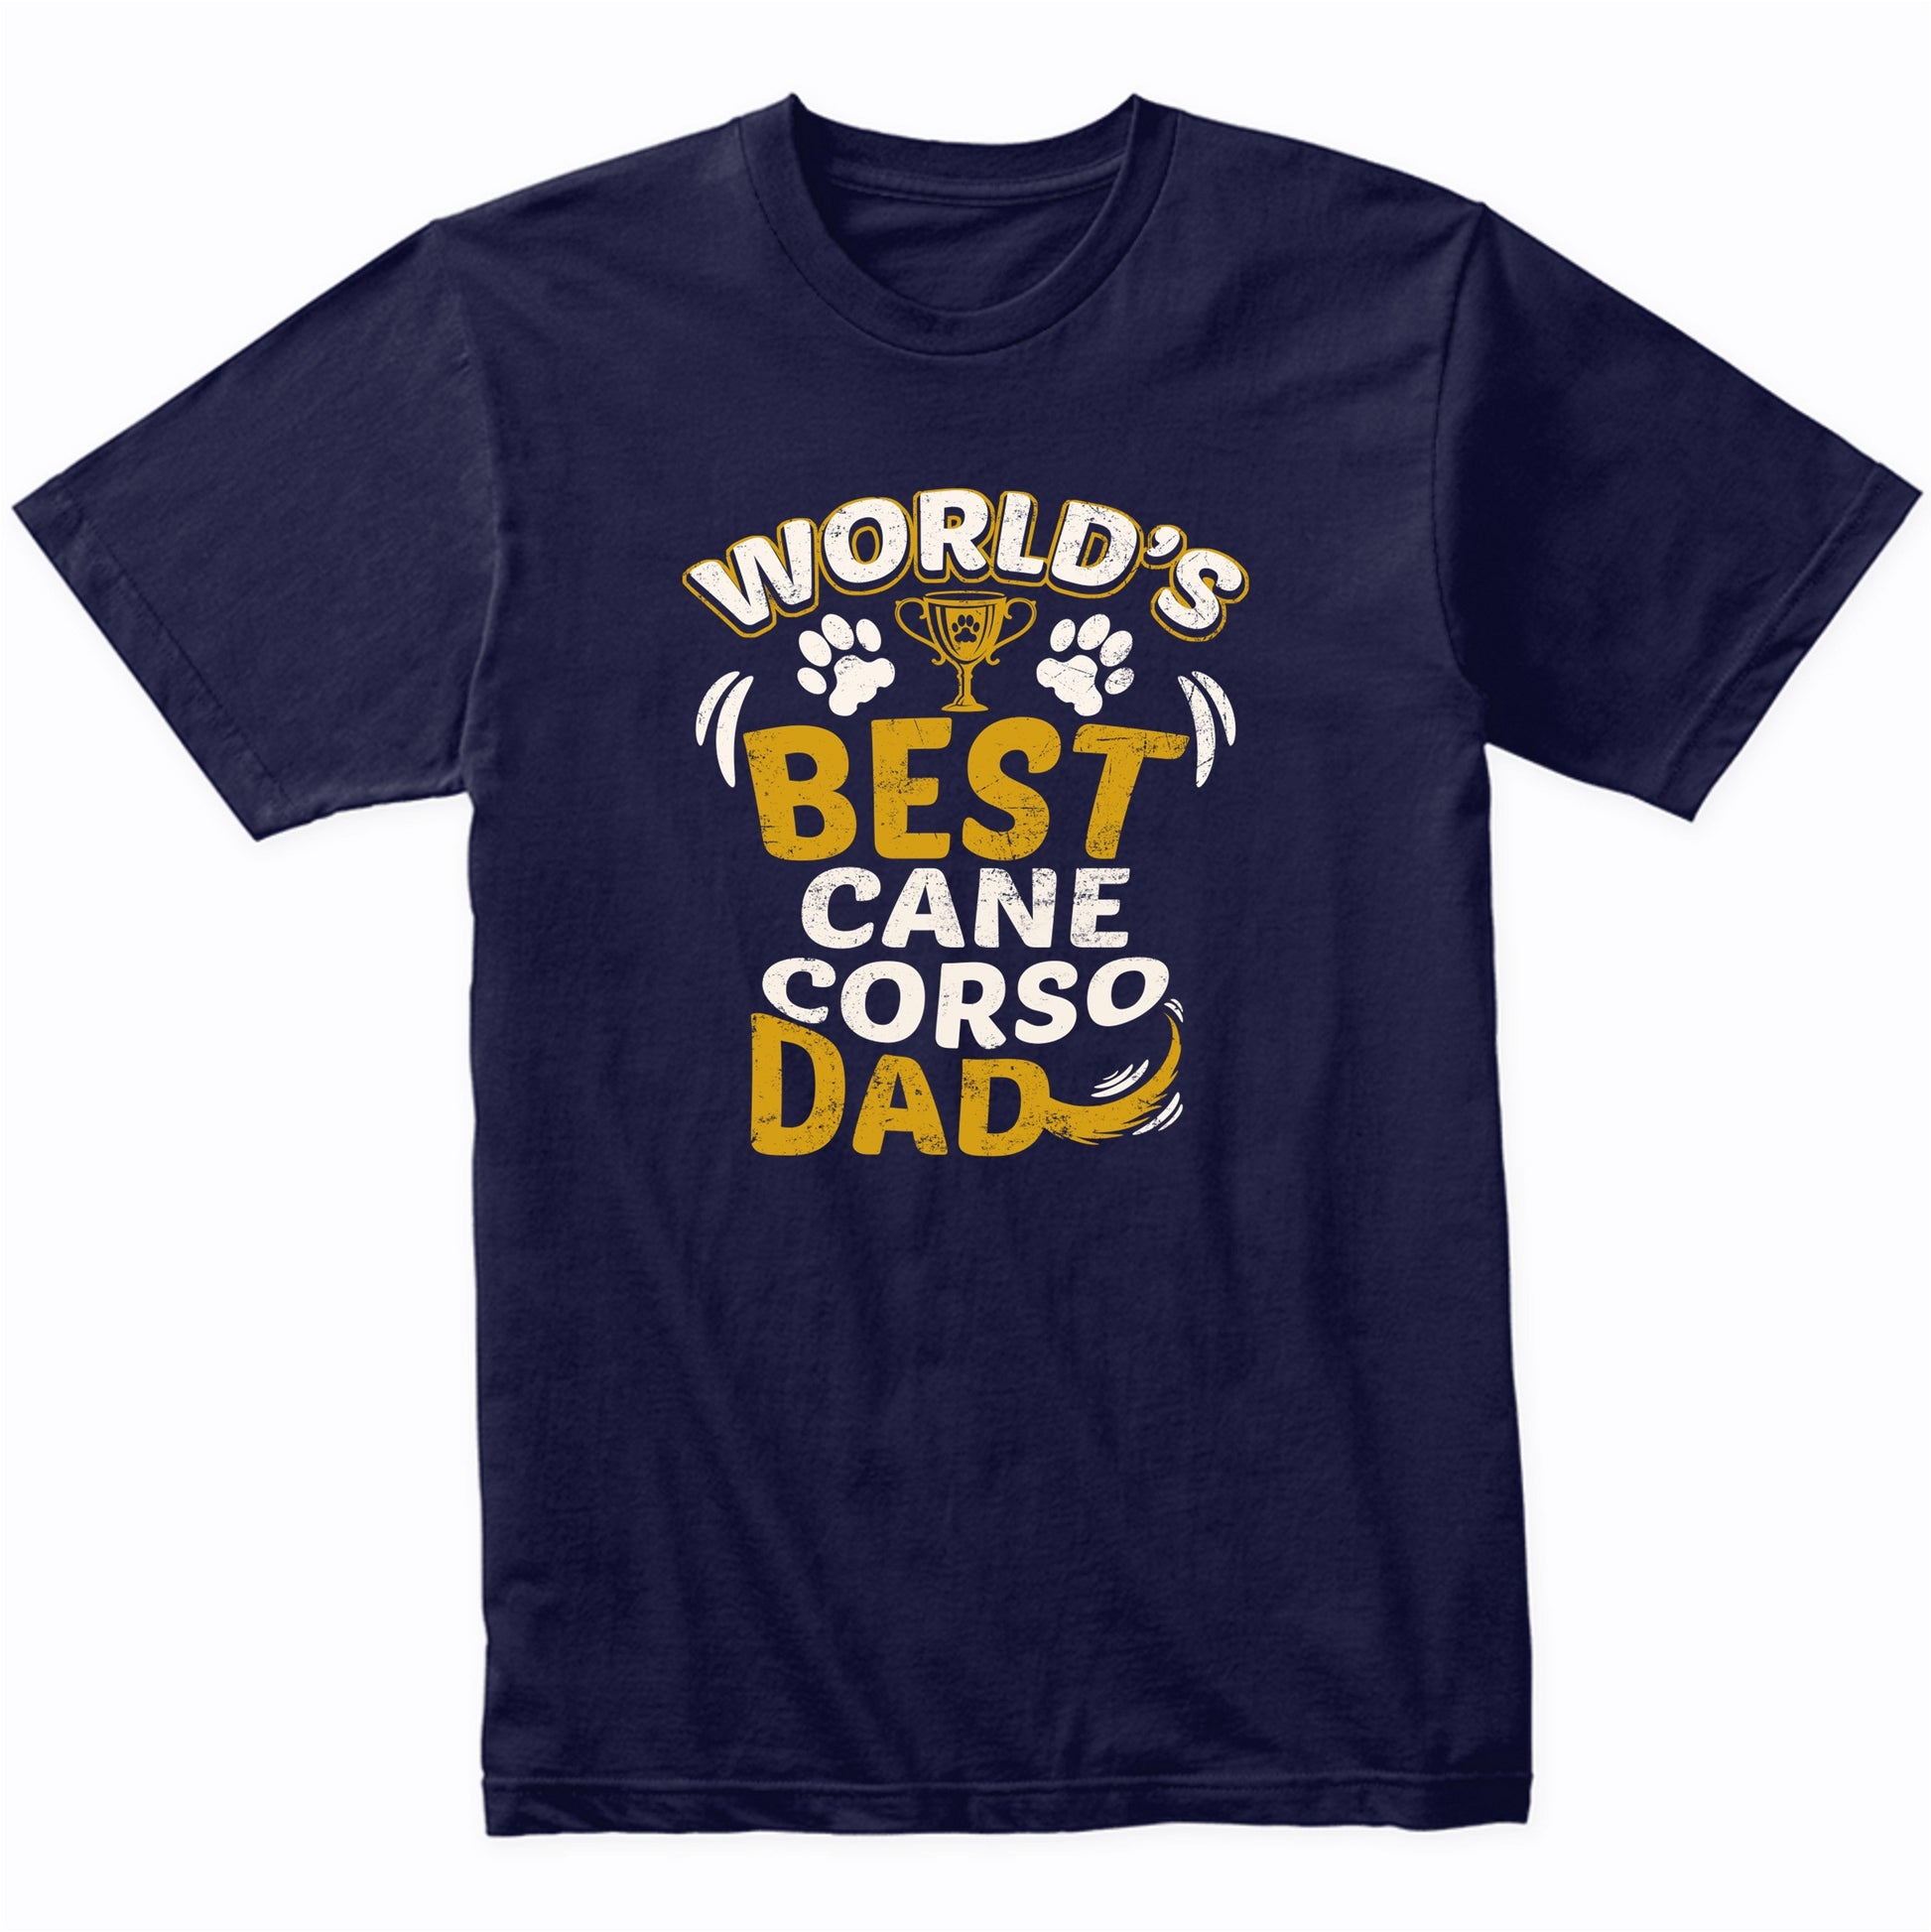 World's Best Cane Corso Dad Graphic T-Shirt